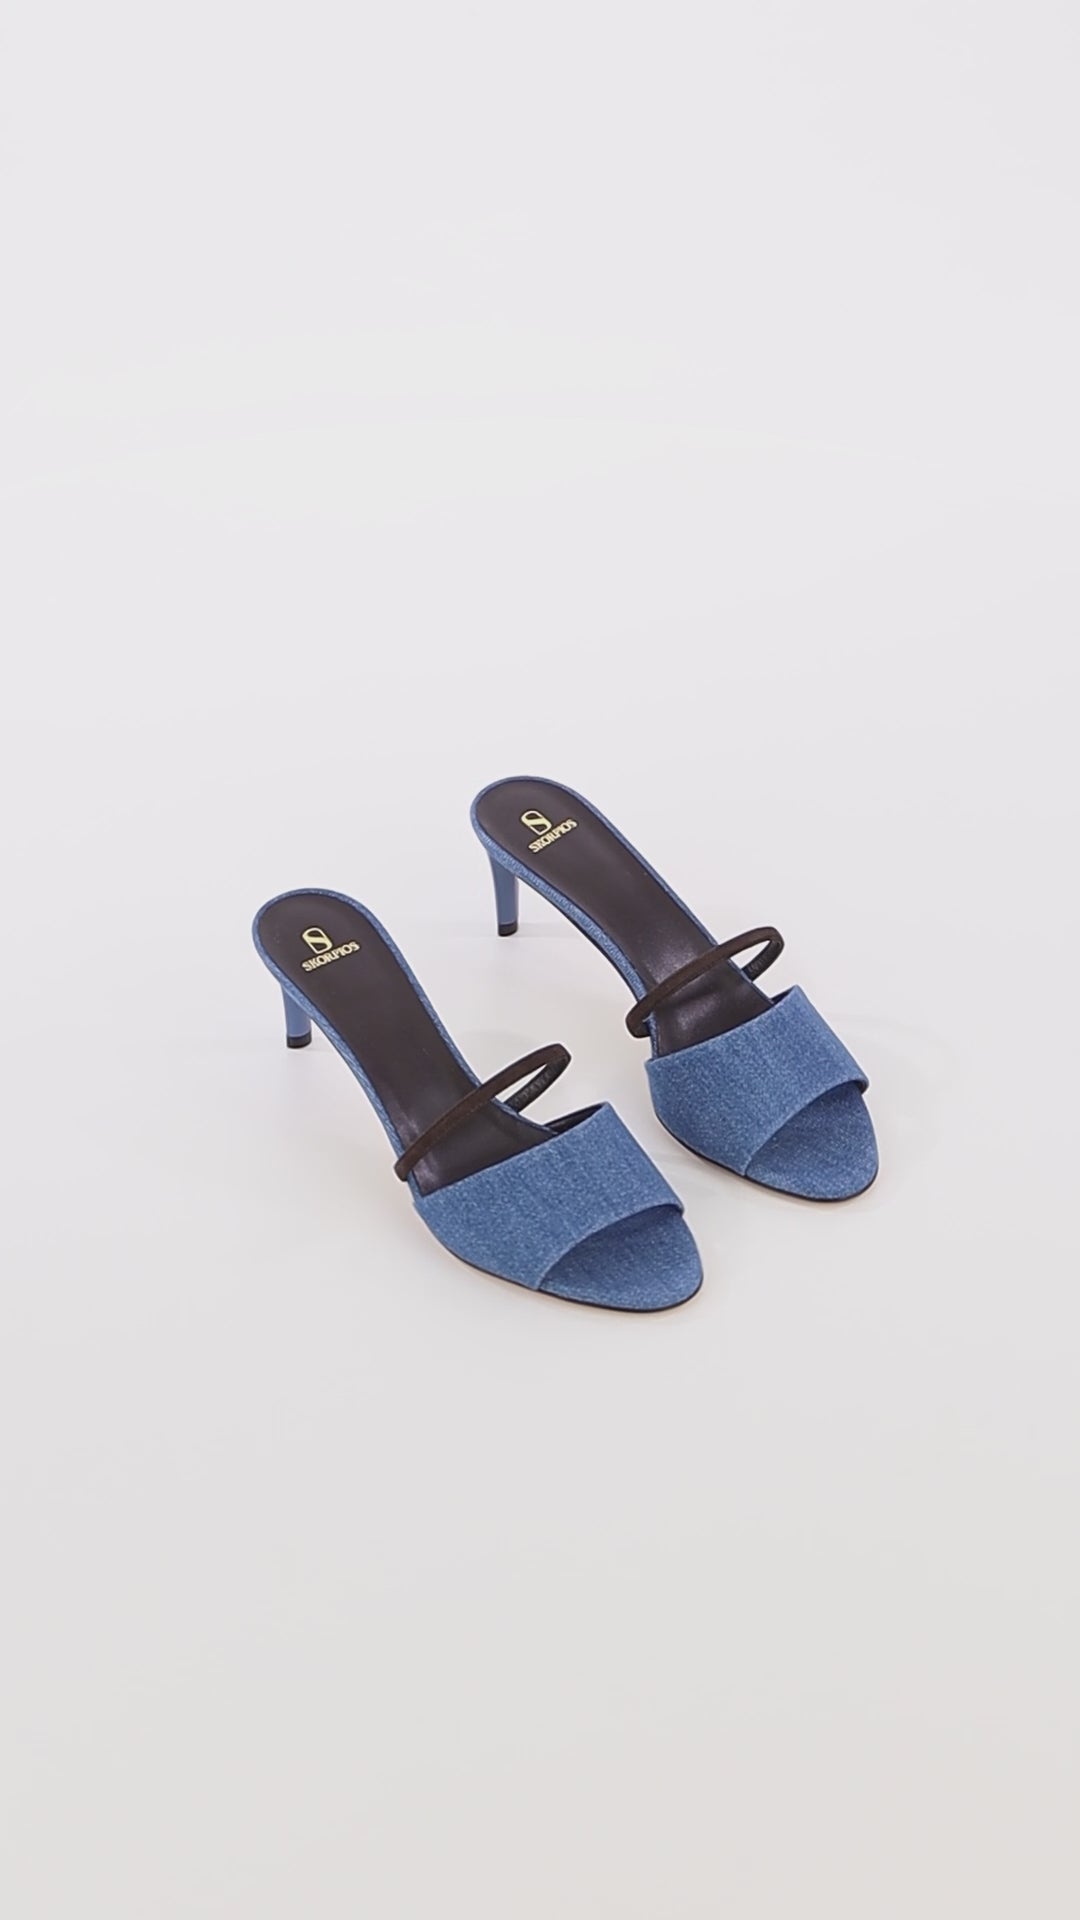 sophisticated blue denim mules mid height stiletto heels skorpios